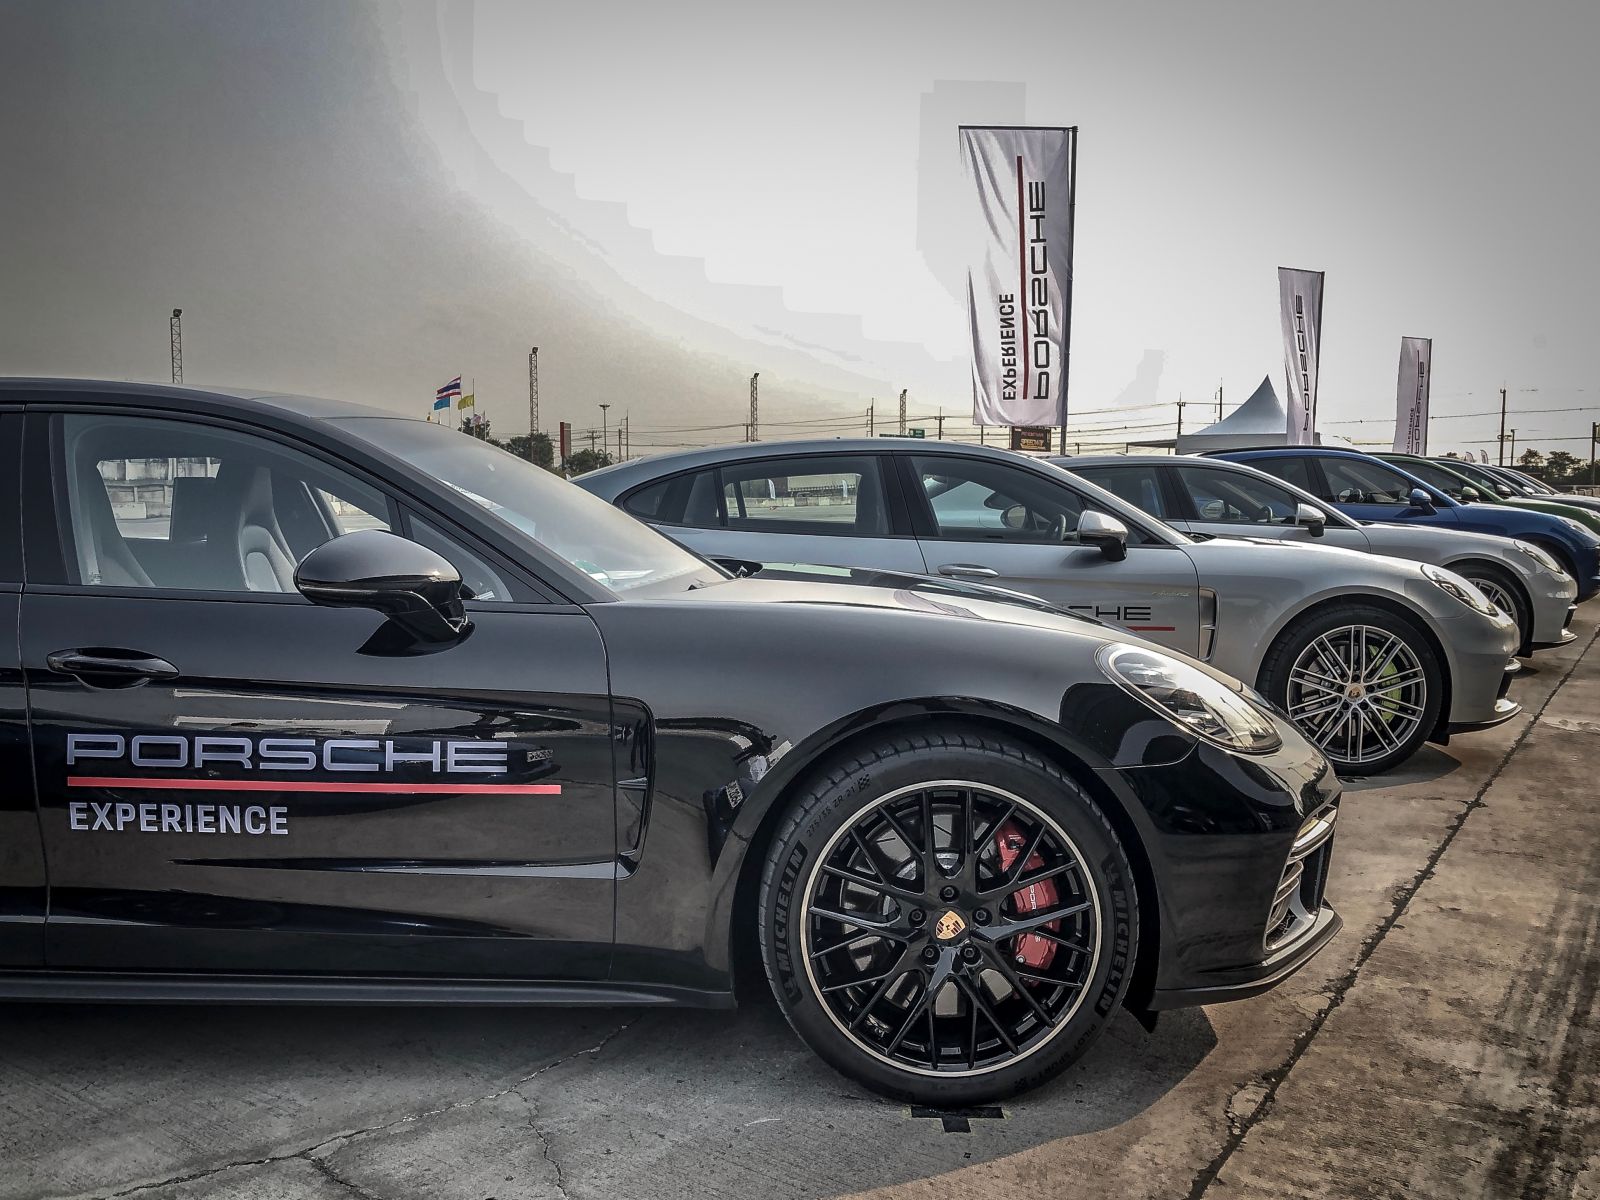 Porsche World Roadshow 2019 